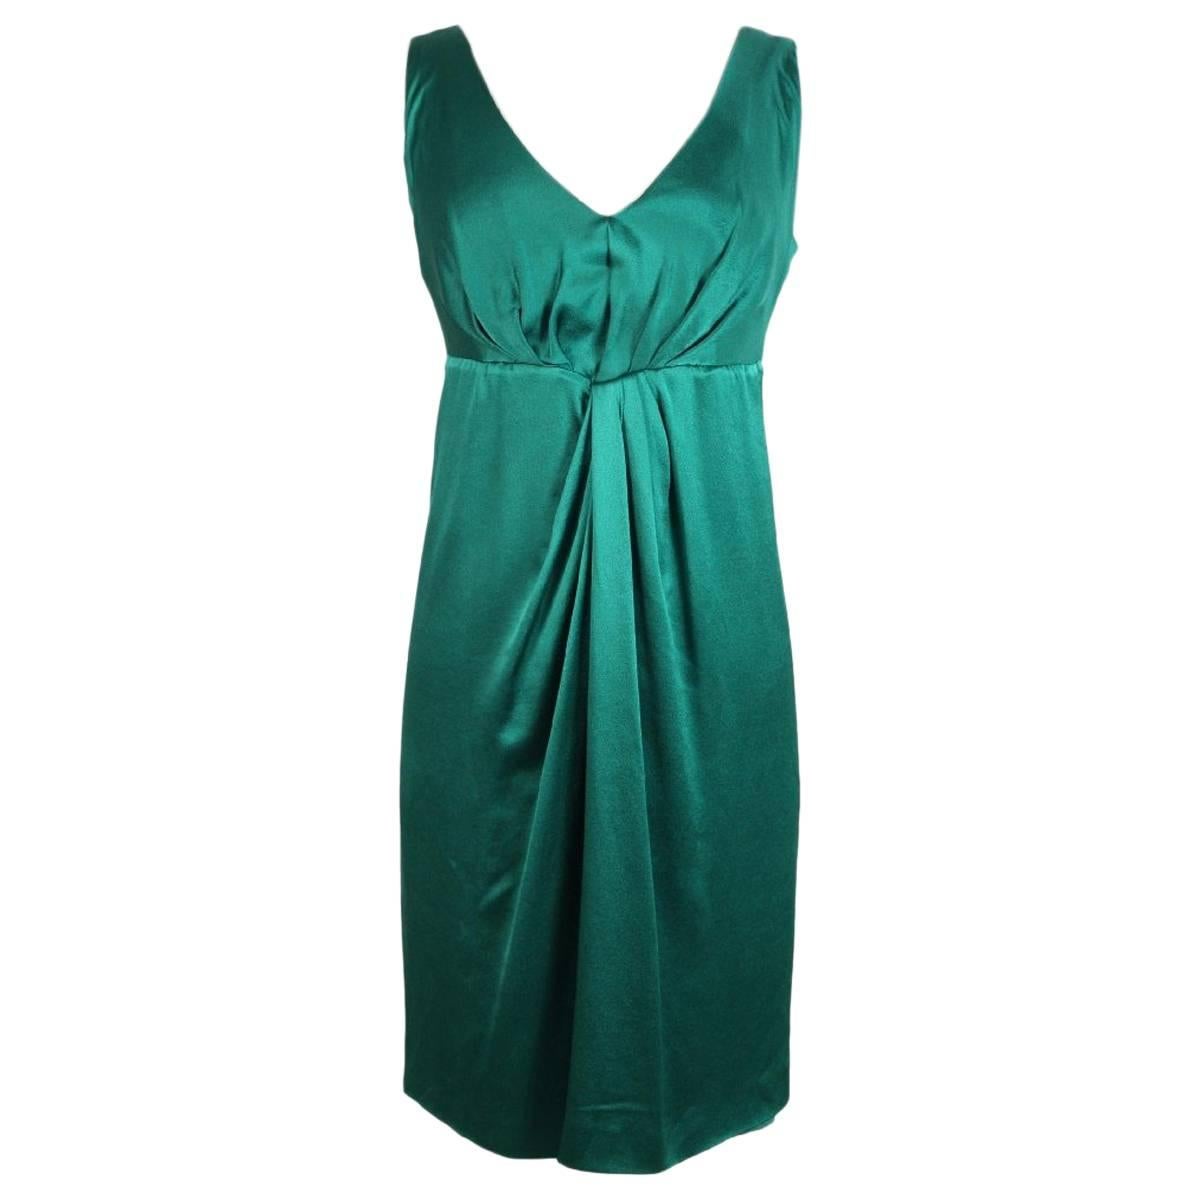 Alberta Ferretti silk emerald evening dress size 40 it made italy 2000s